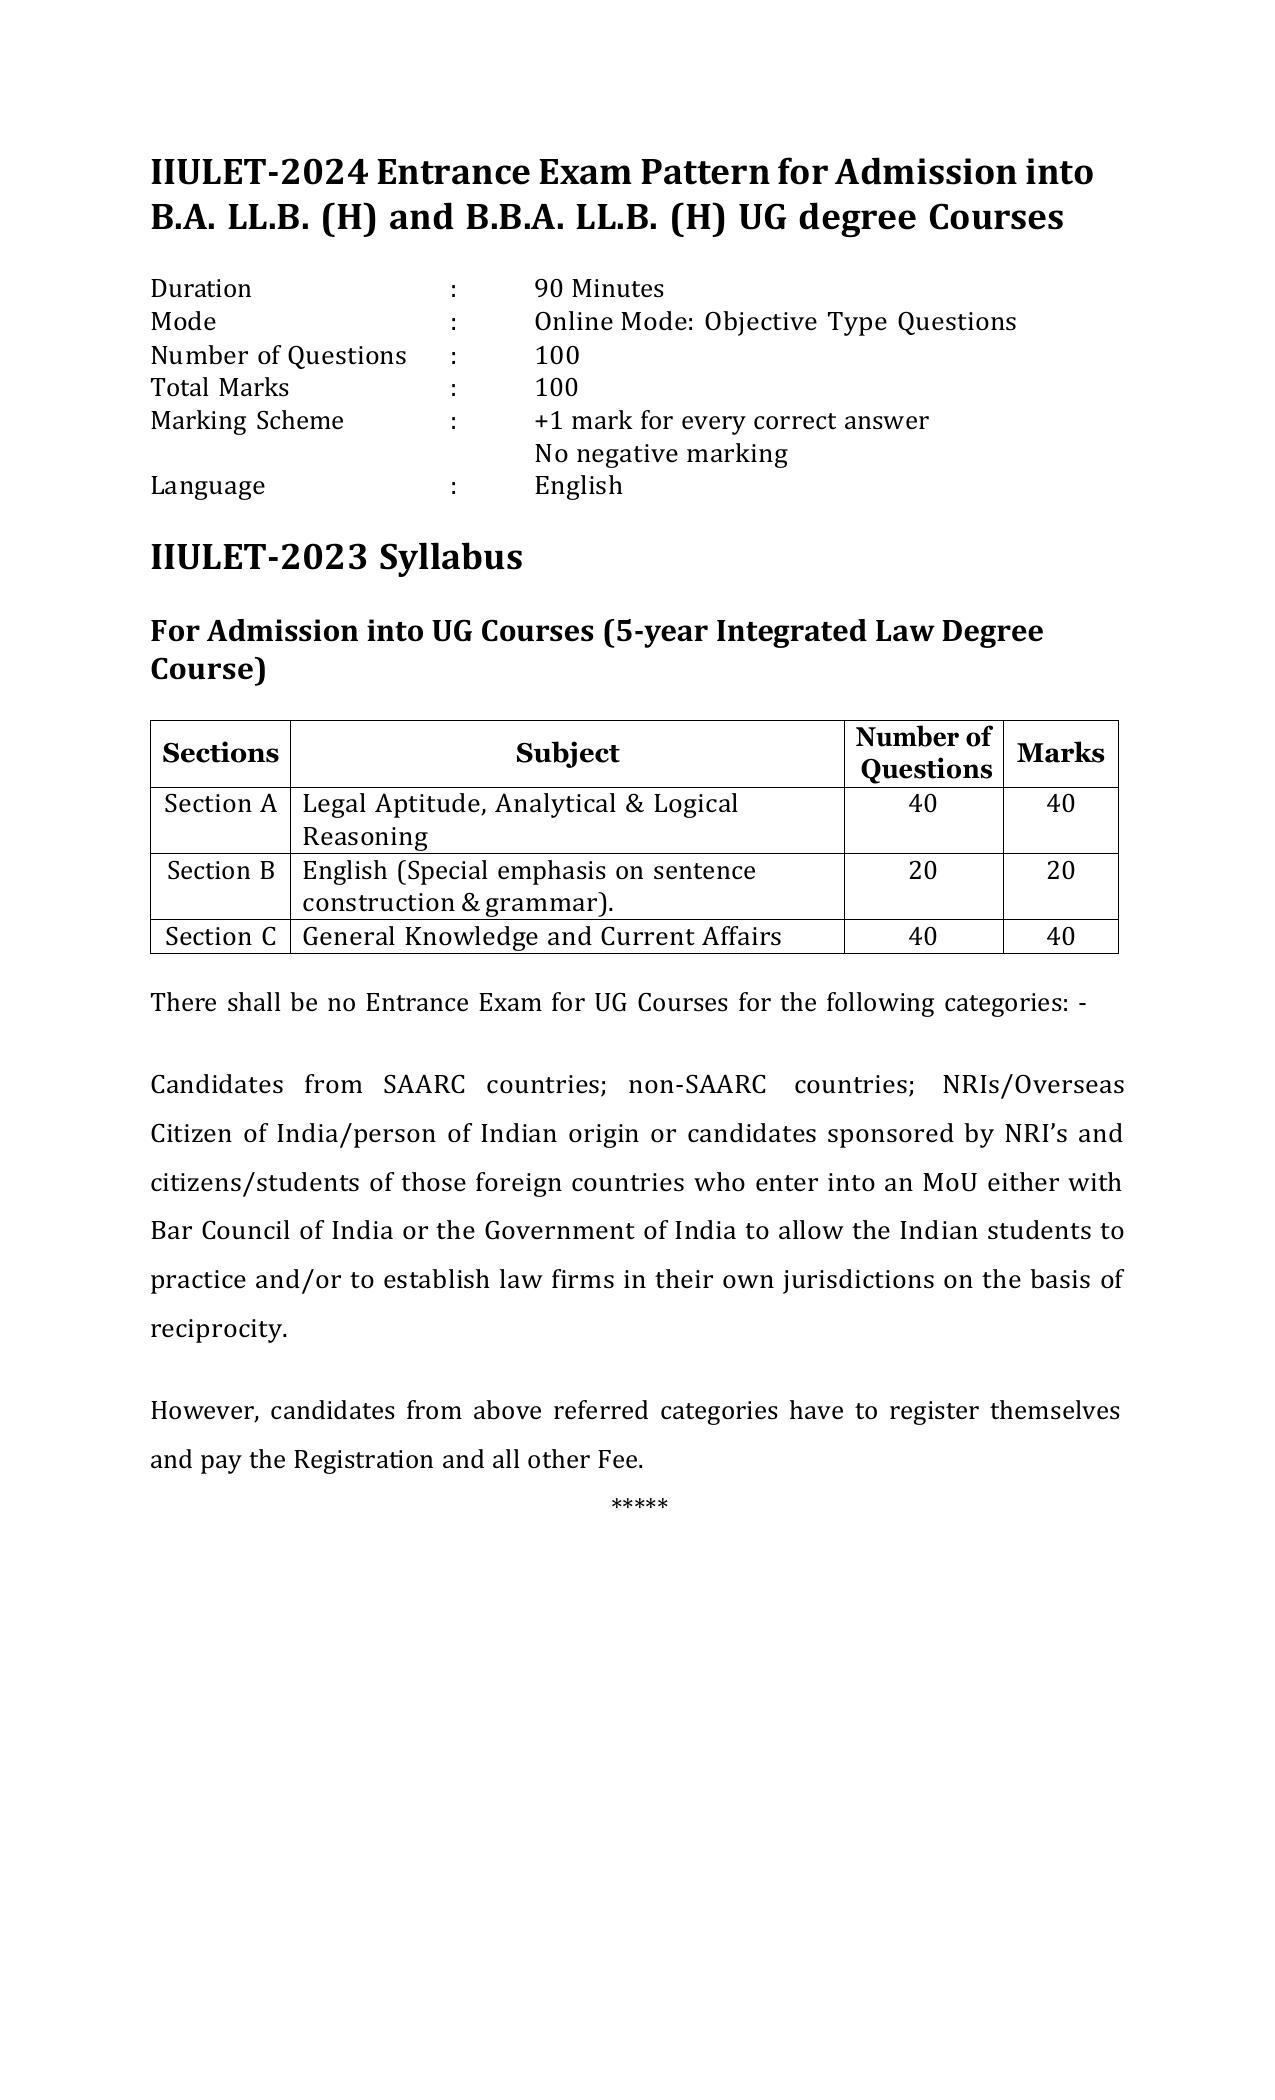 IIULET 2024 Exam and UG Syllabus Pattern - Page 1